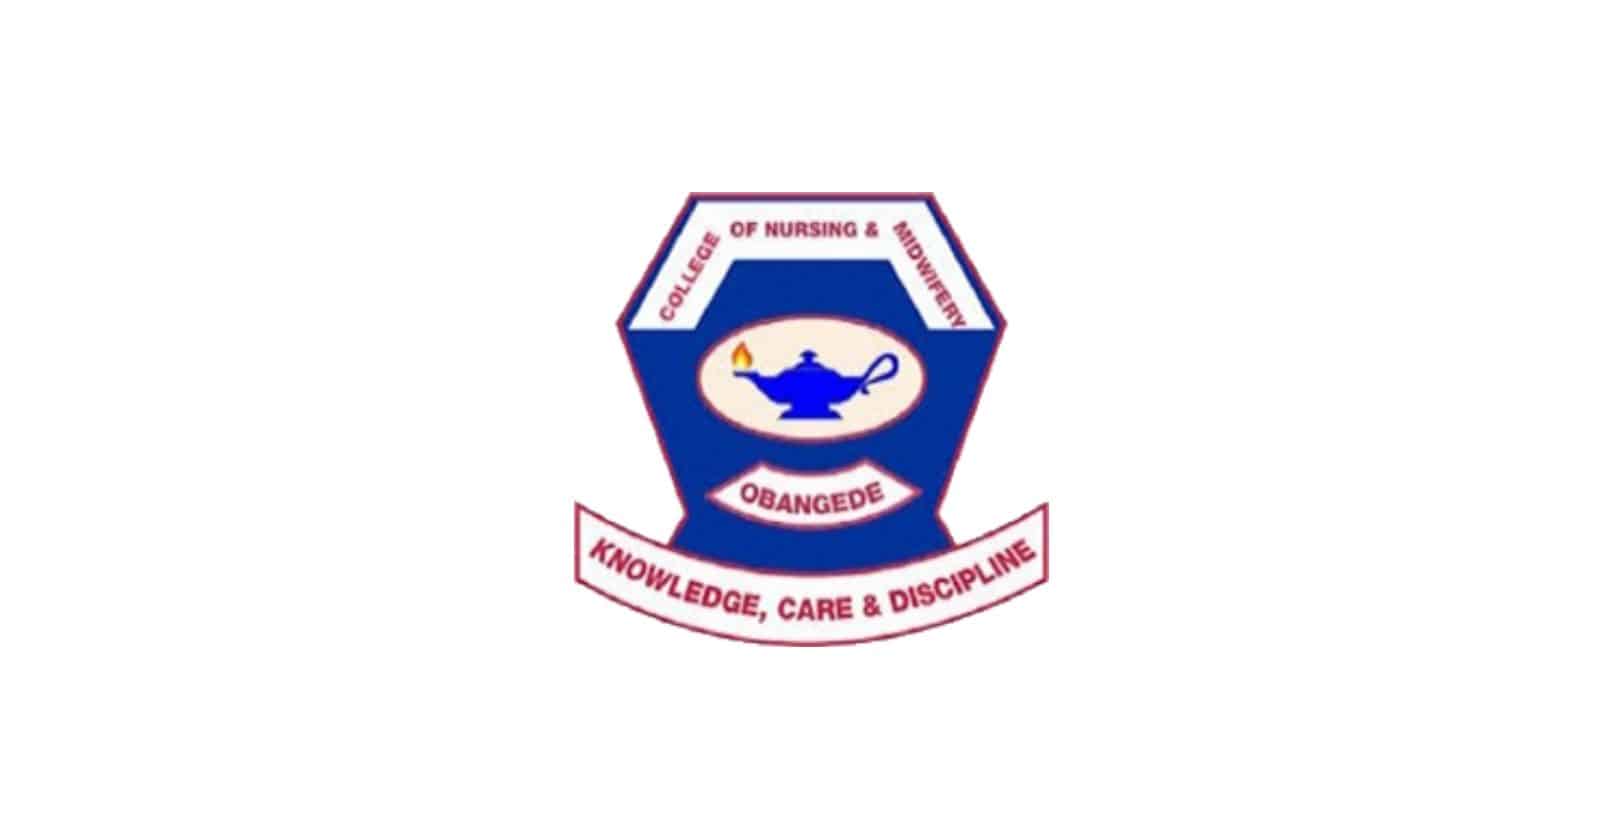 Kogi State College of Nursing and Midwifery (KGSCNM) Post Basic Midwifery Programme